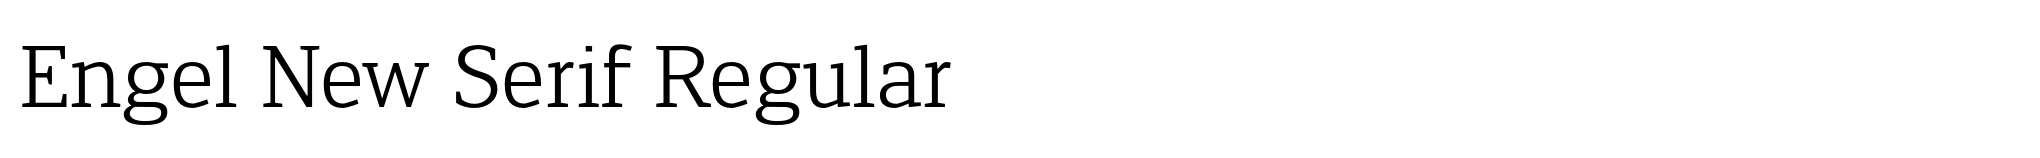 Engel New Serif Regular image